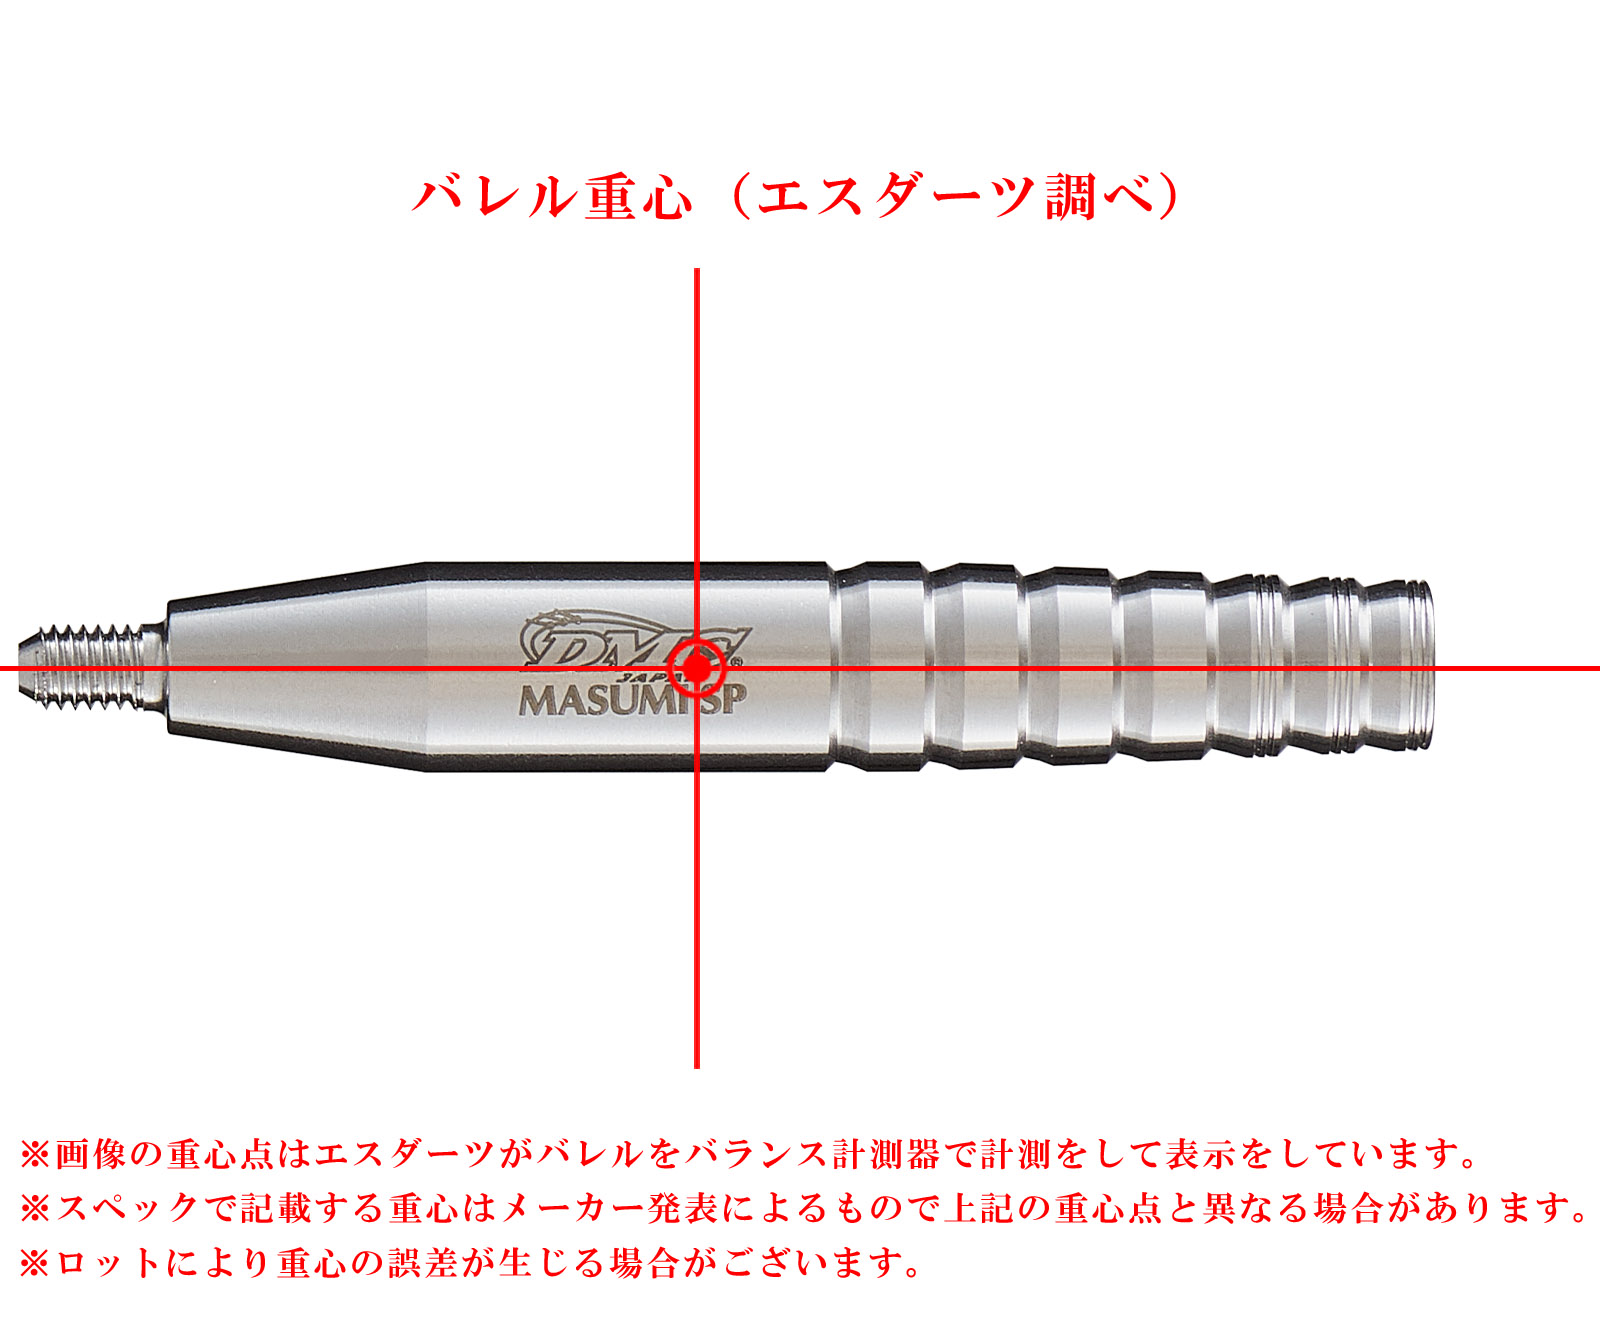 DMC】Sabre MASUMI SP Ver.2 Masumi Chino model acute | Darts Online